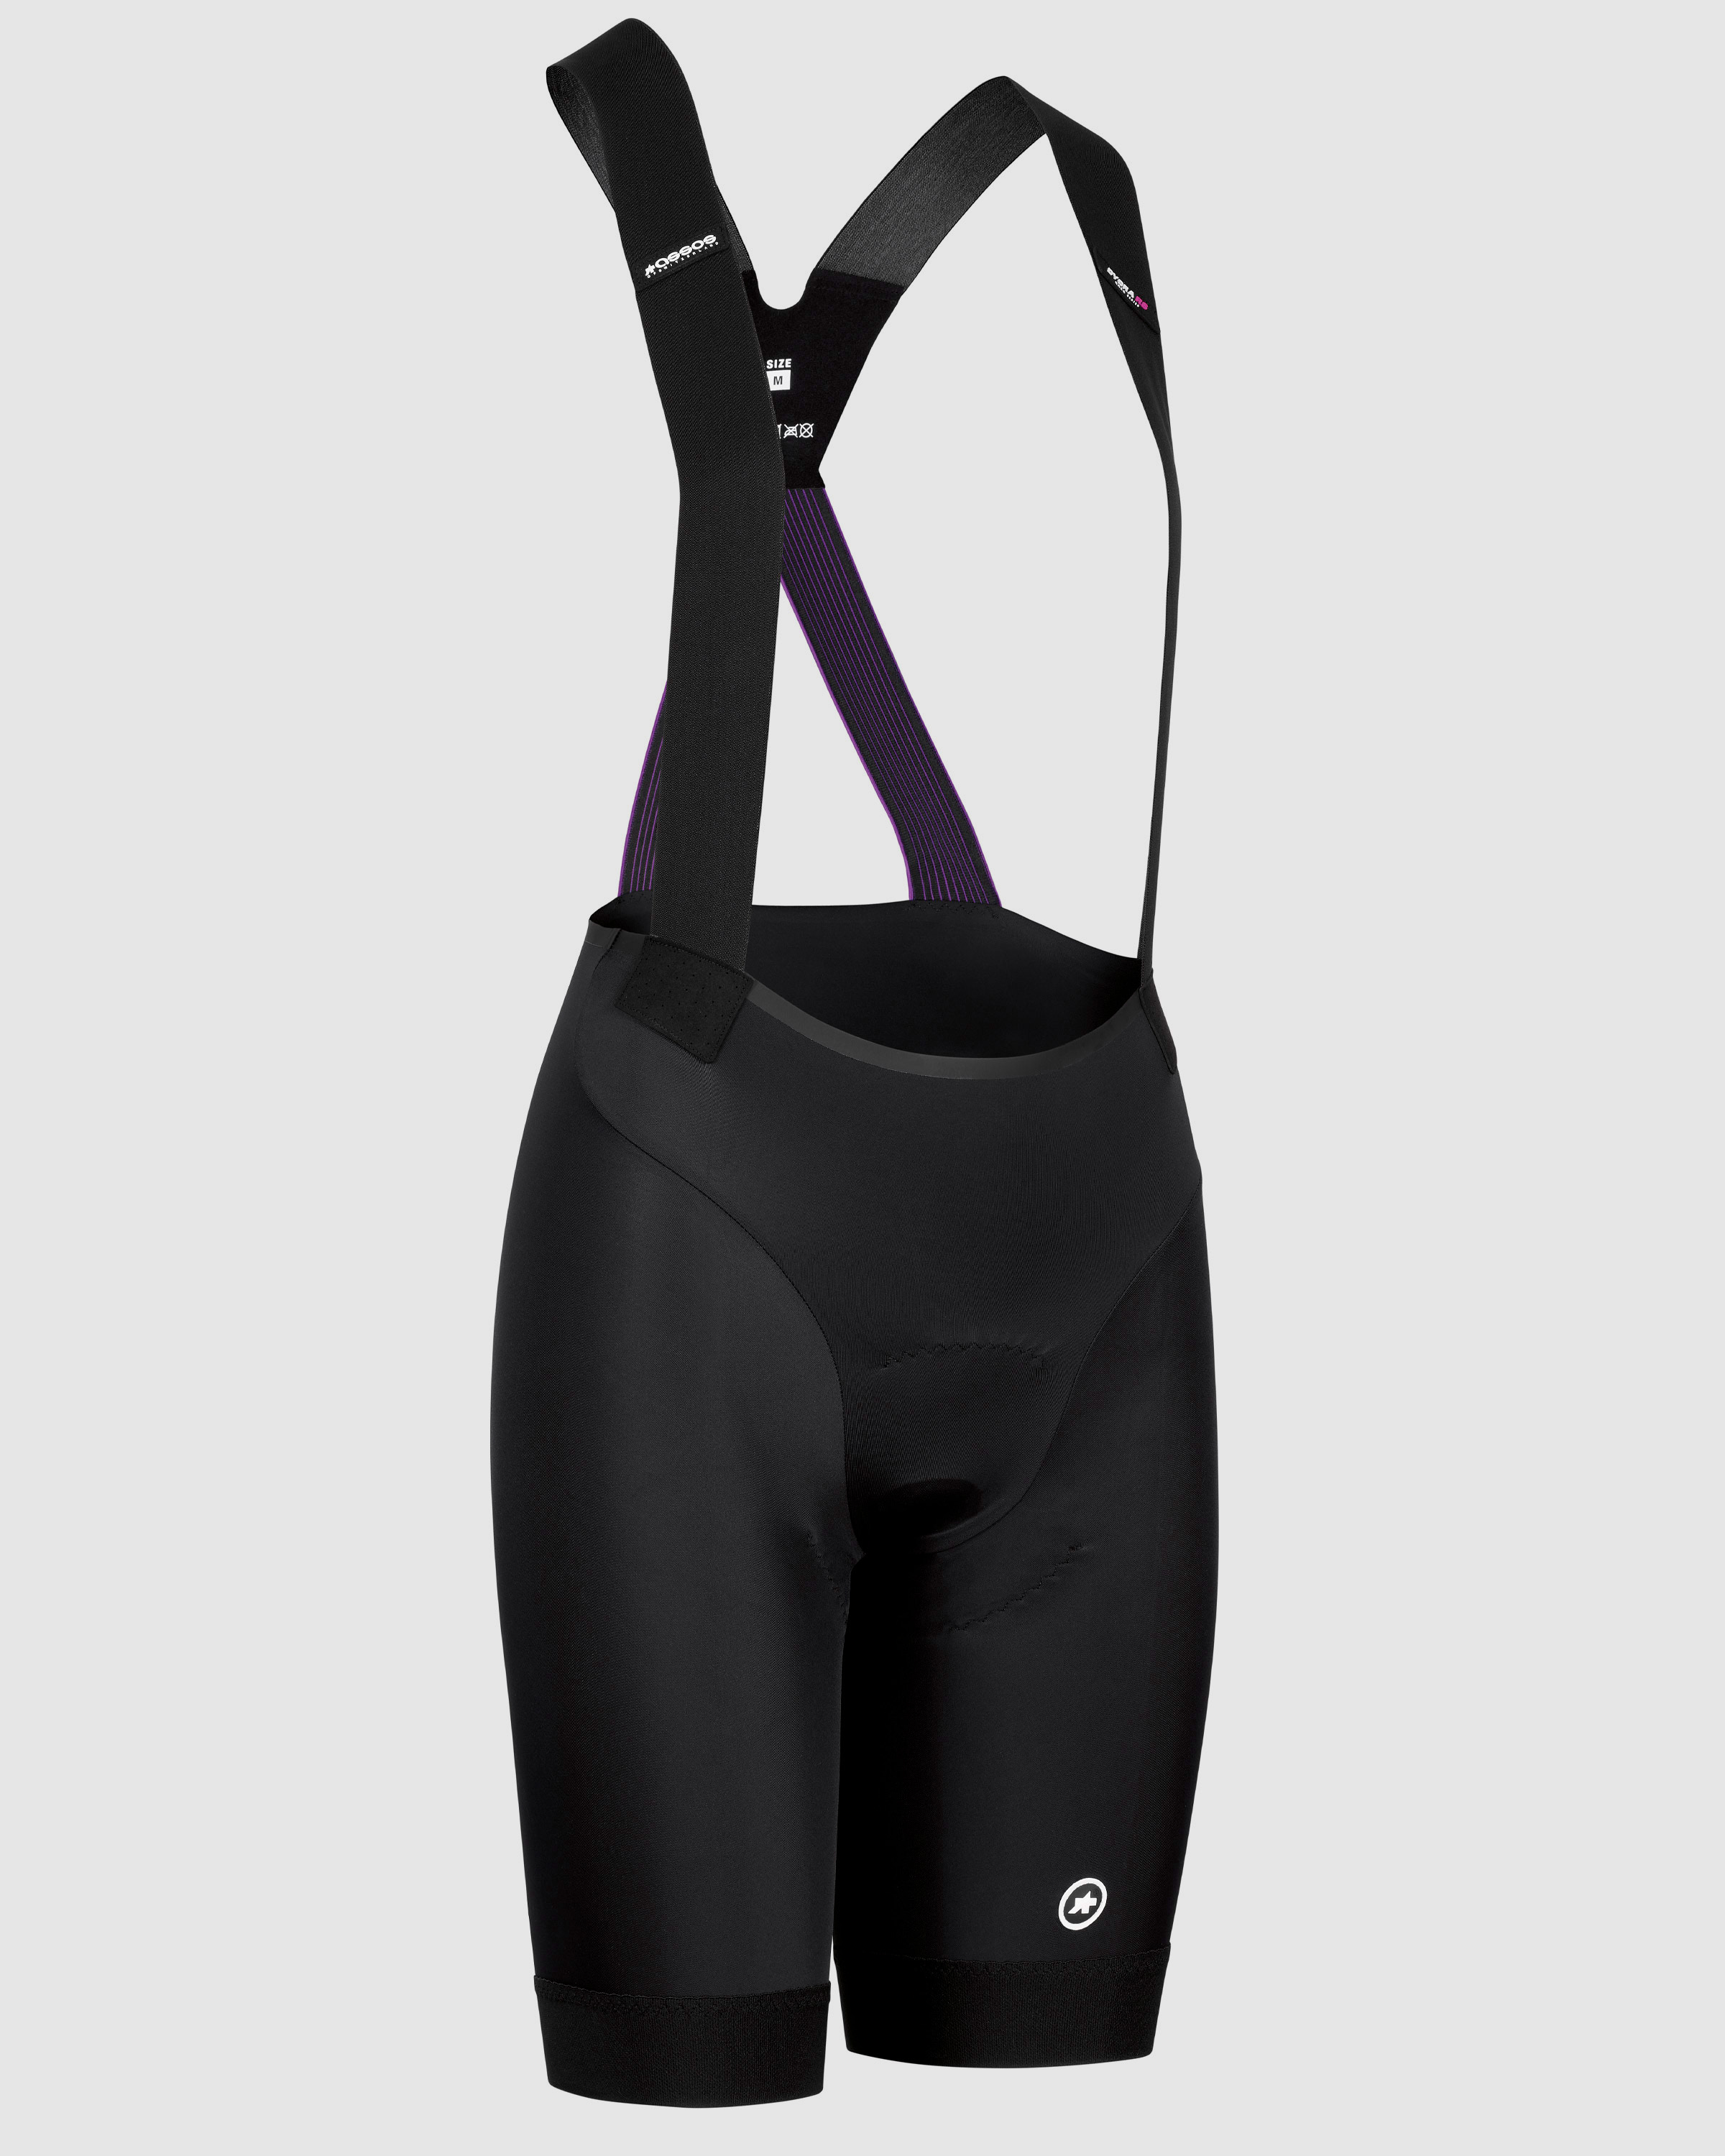 DYORA RS Summer Bib Shorts S9 - ASSOS Of Switzerland - Official Outlet